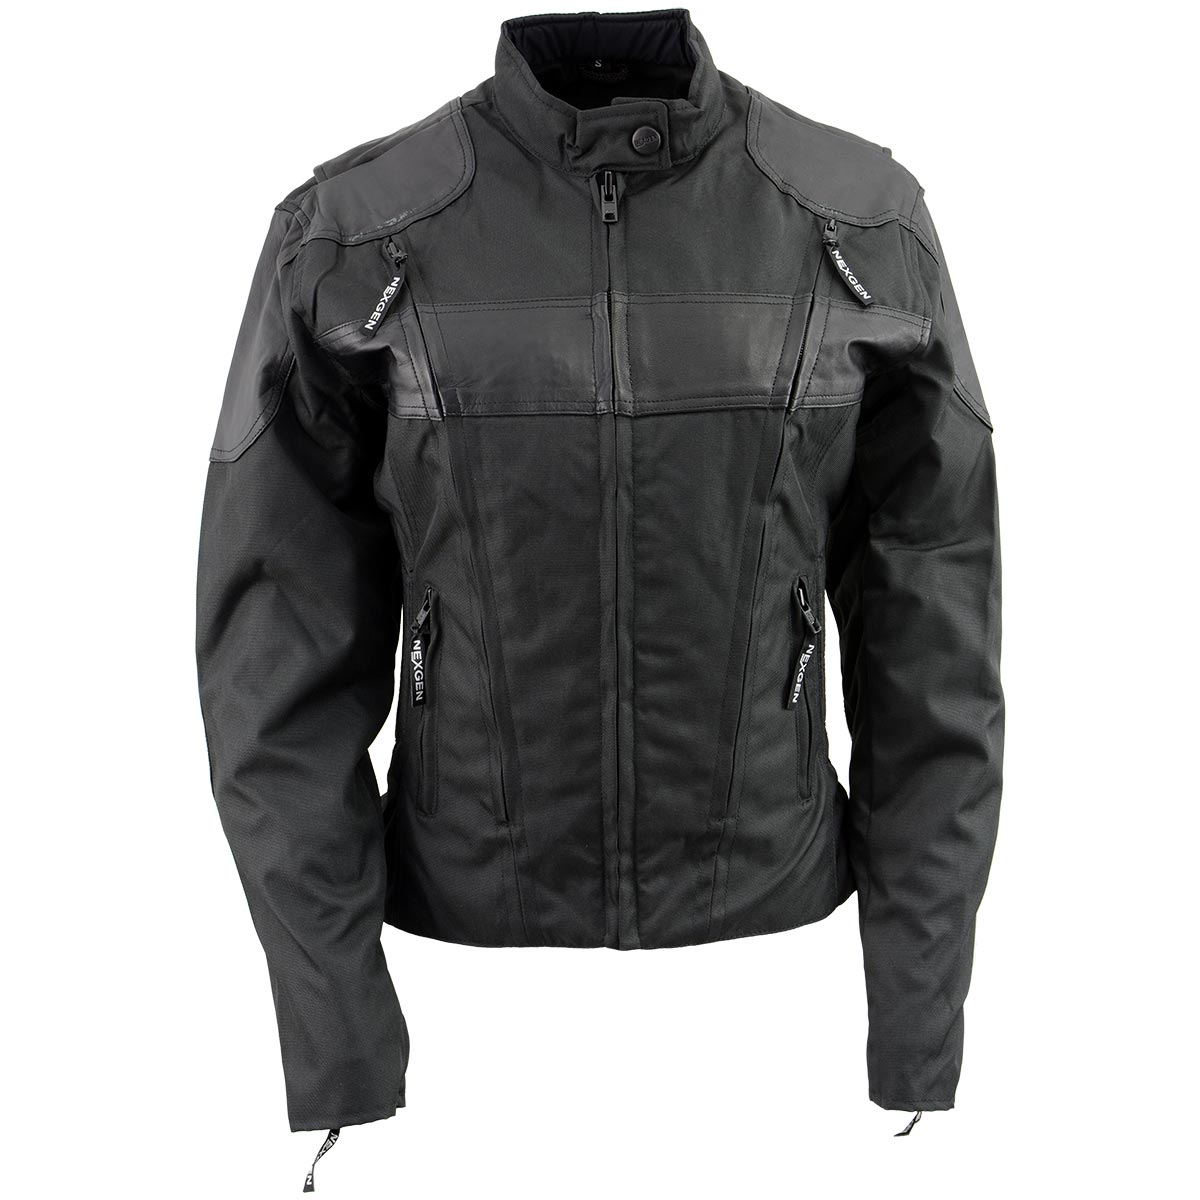 NexGen SH2179 Women's Black Leather and Textile Vented Racer Jacket